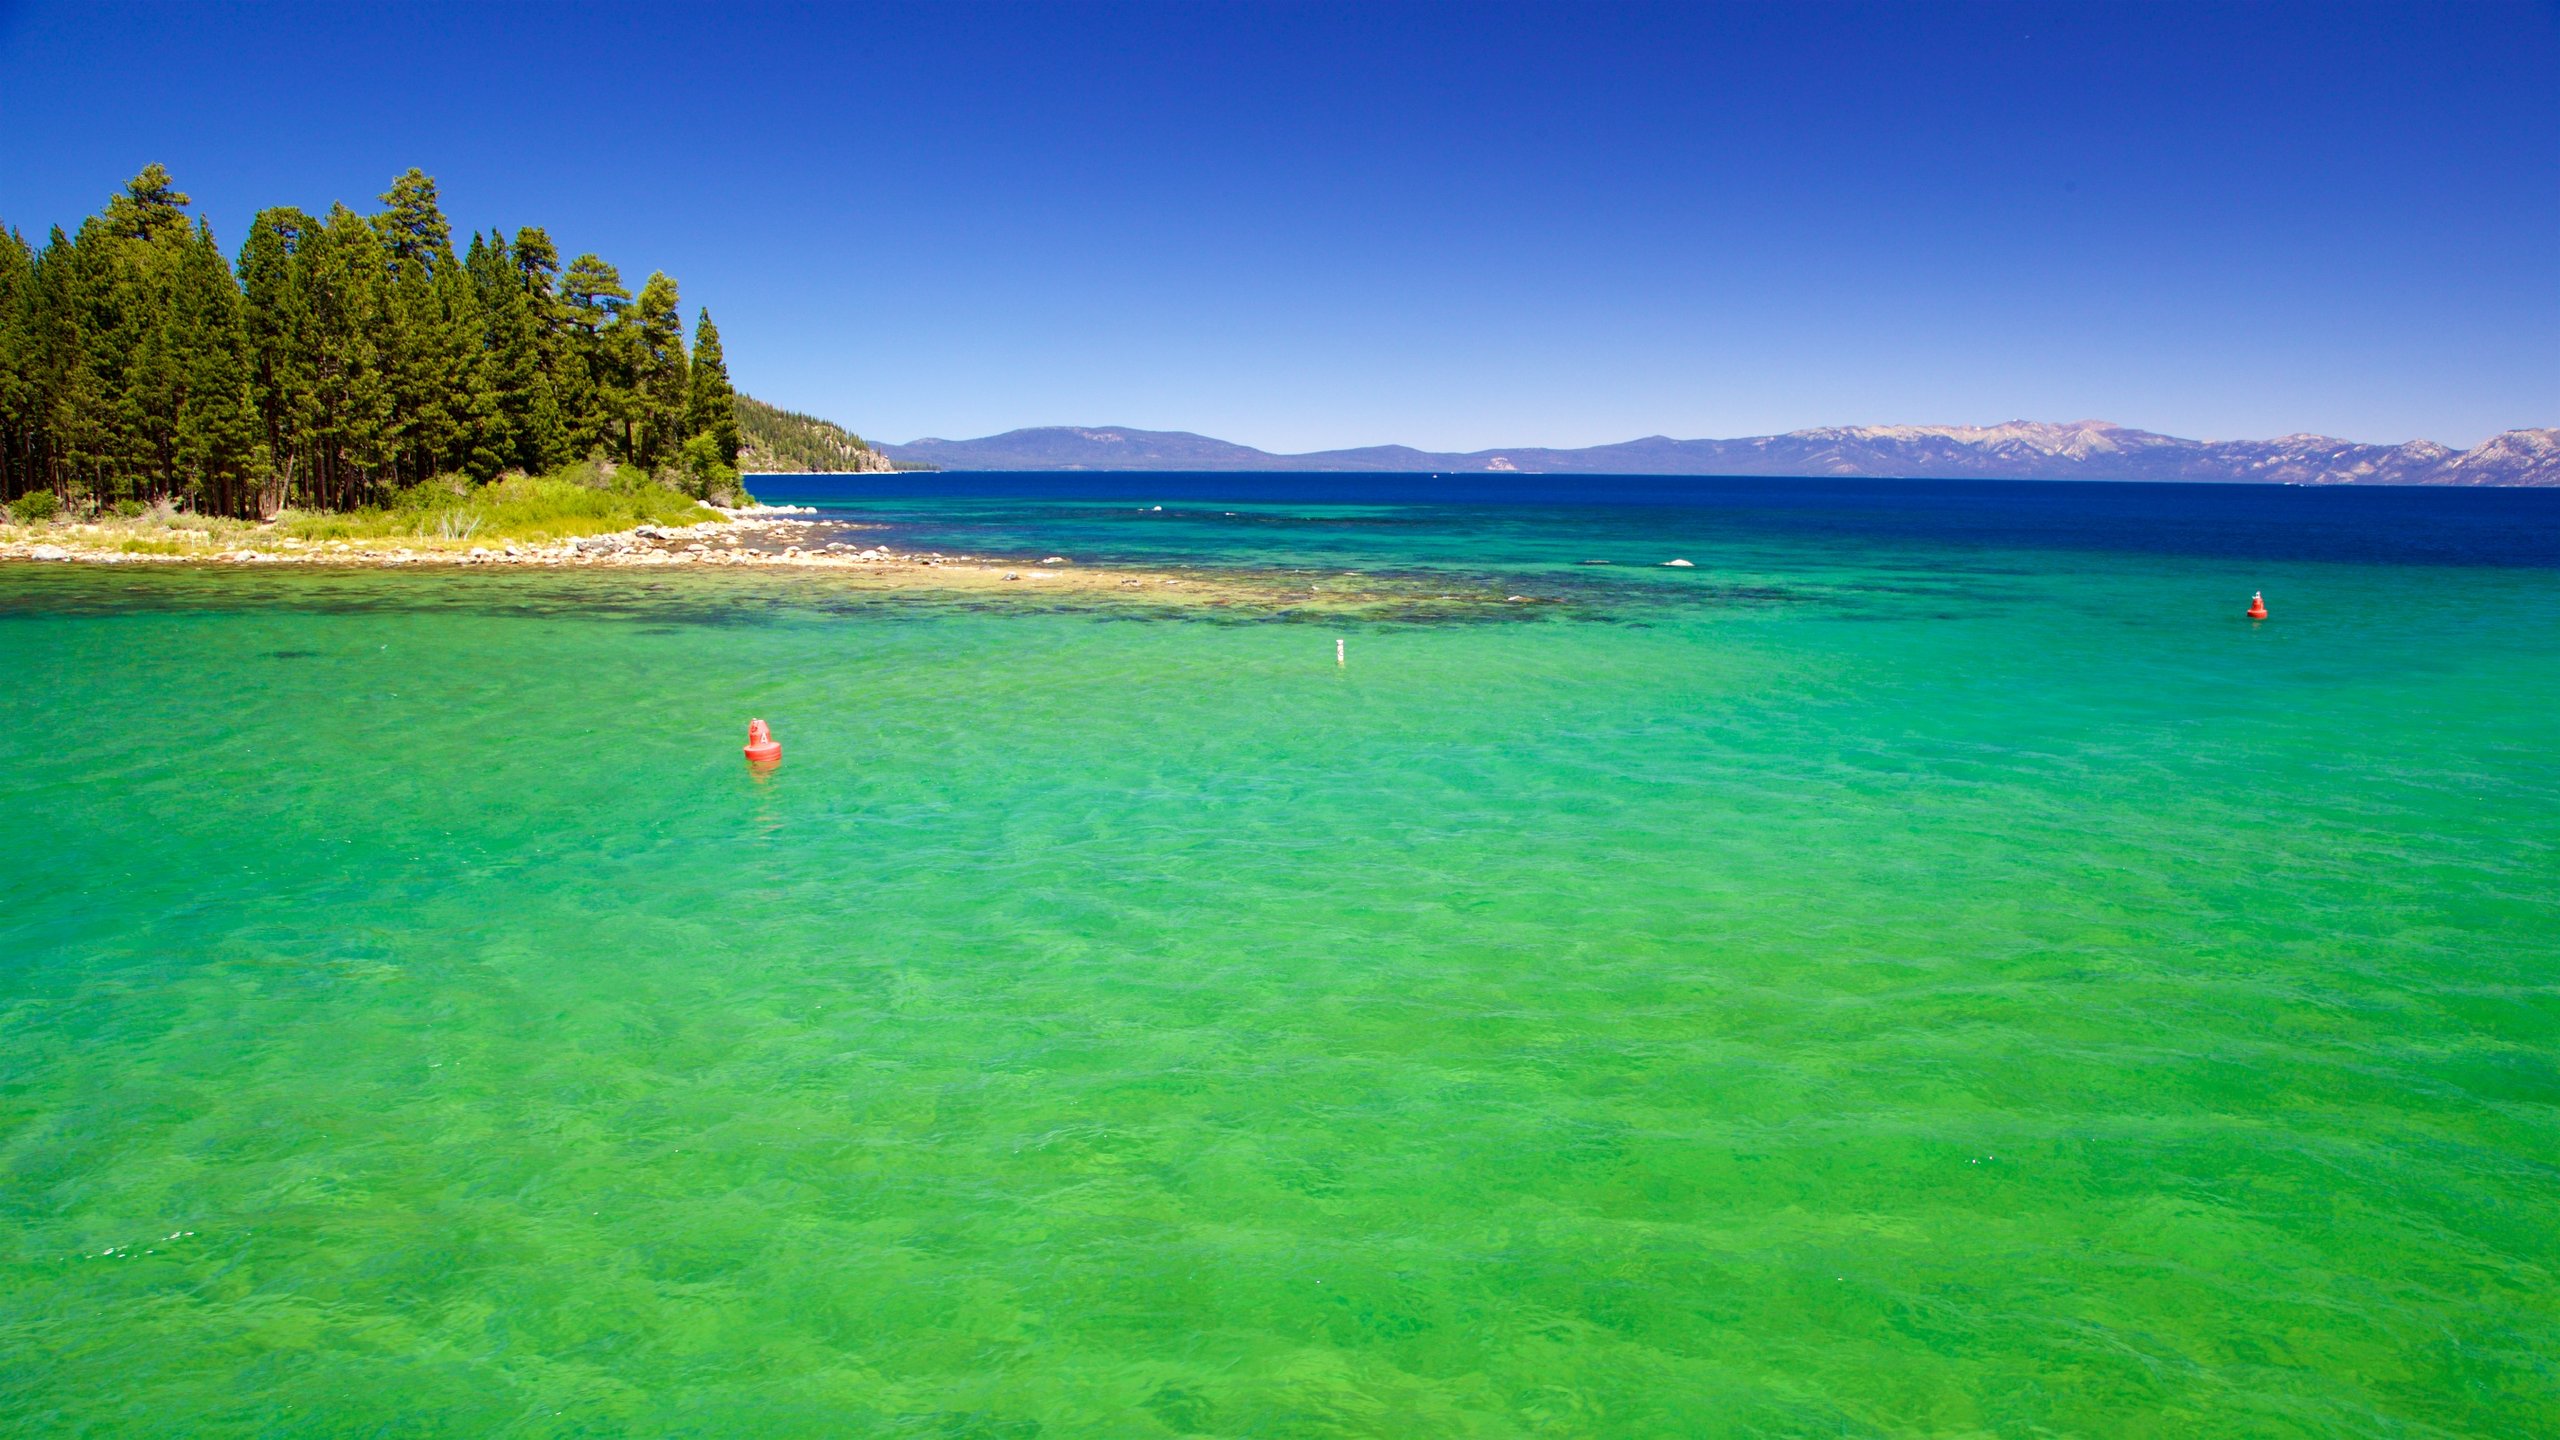 South Lake Tahoe, California, US